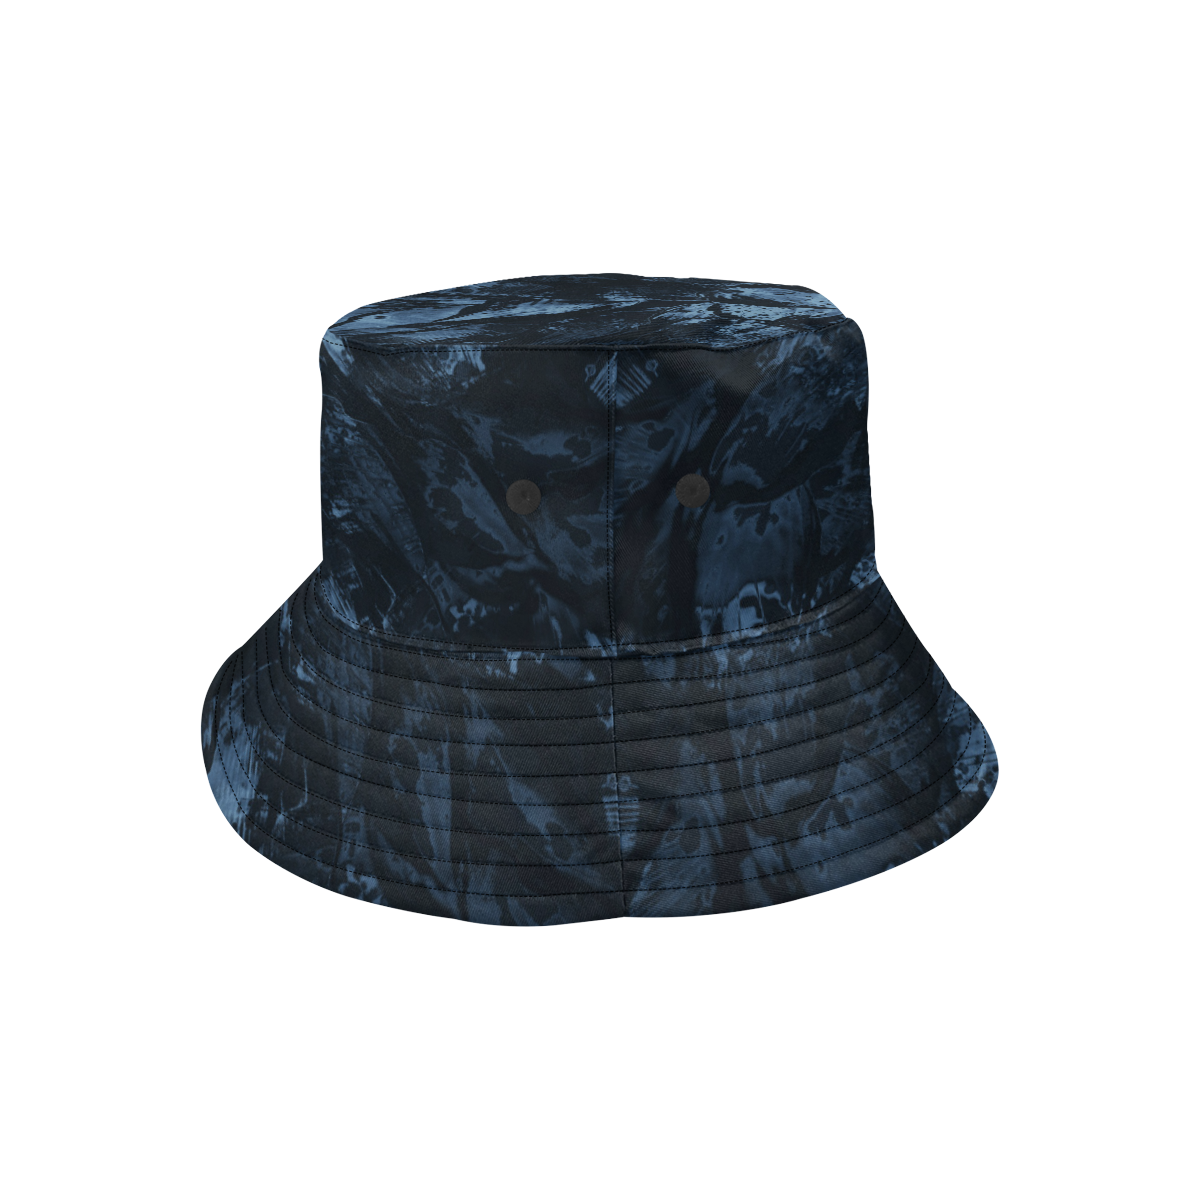 wheelVibe_8500 8 DARKEST BLUE low All Over Print Bucket Hat for Men